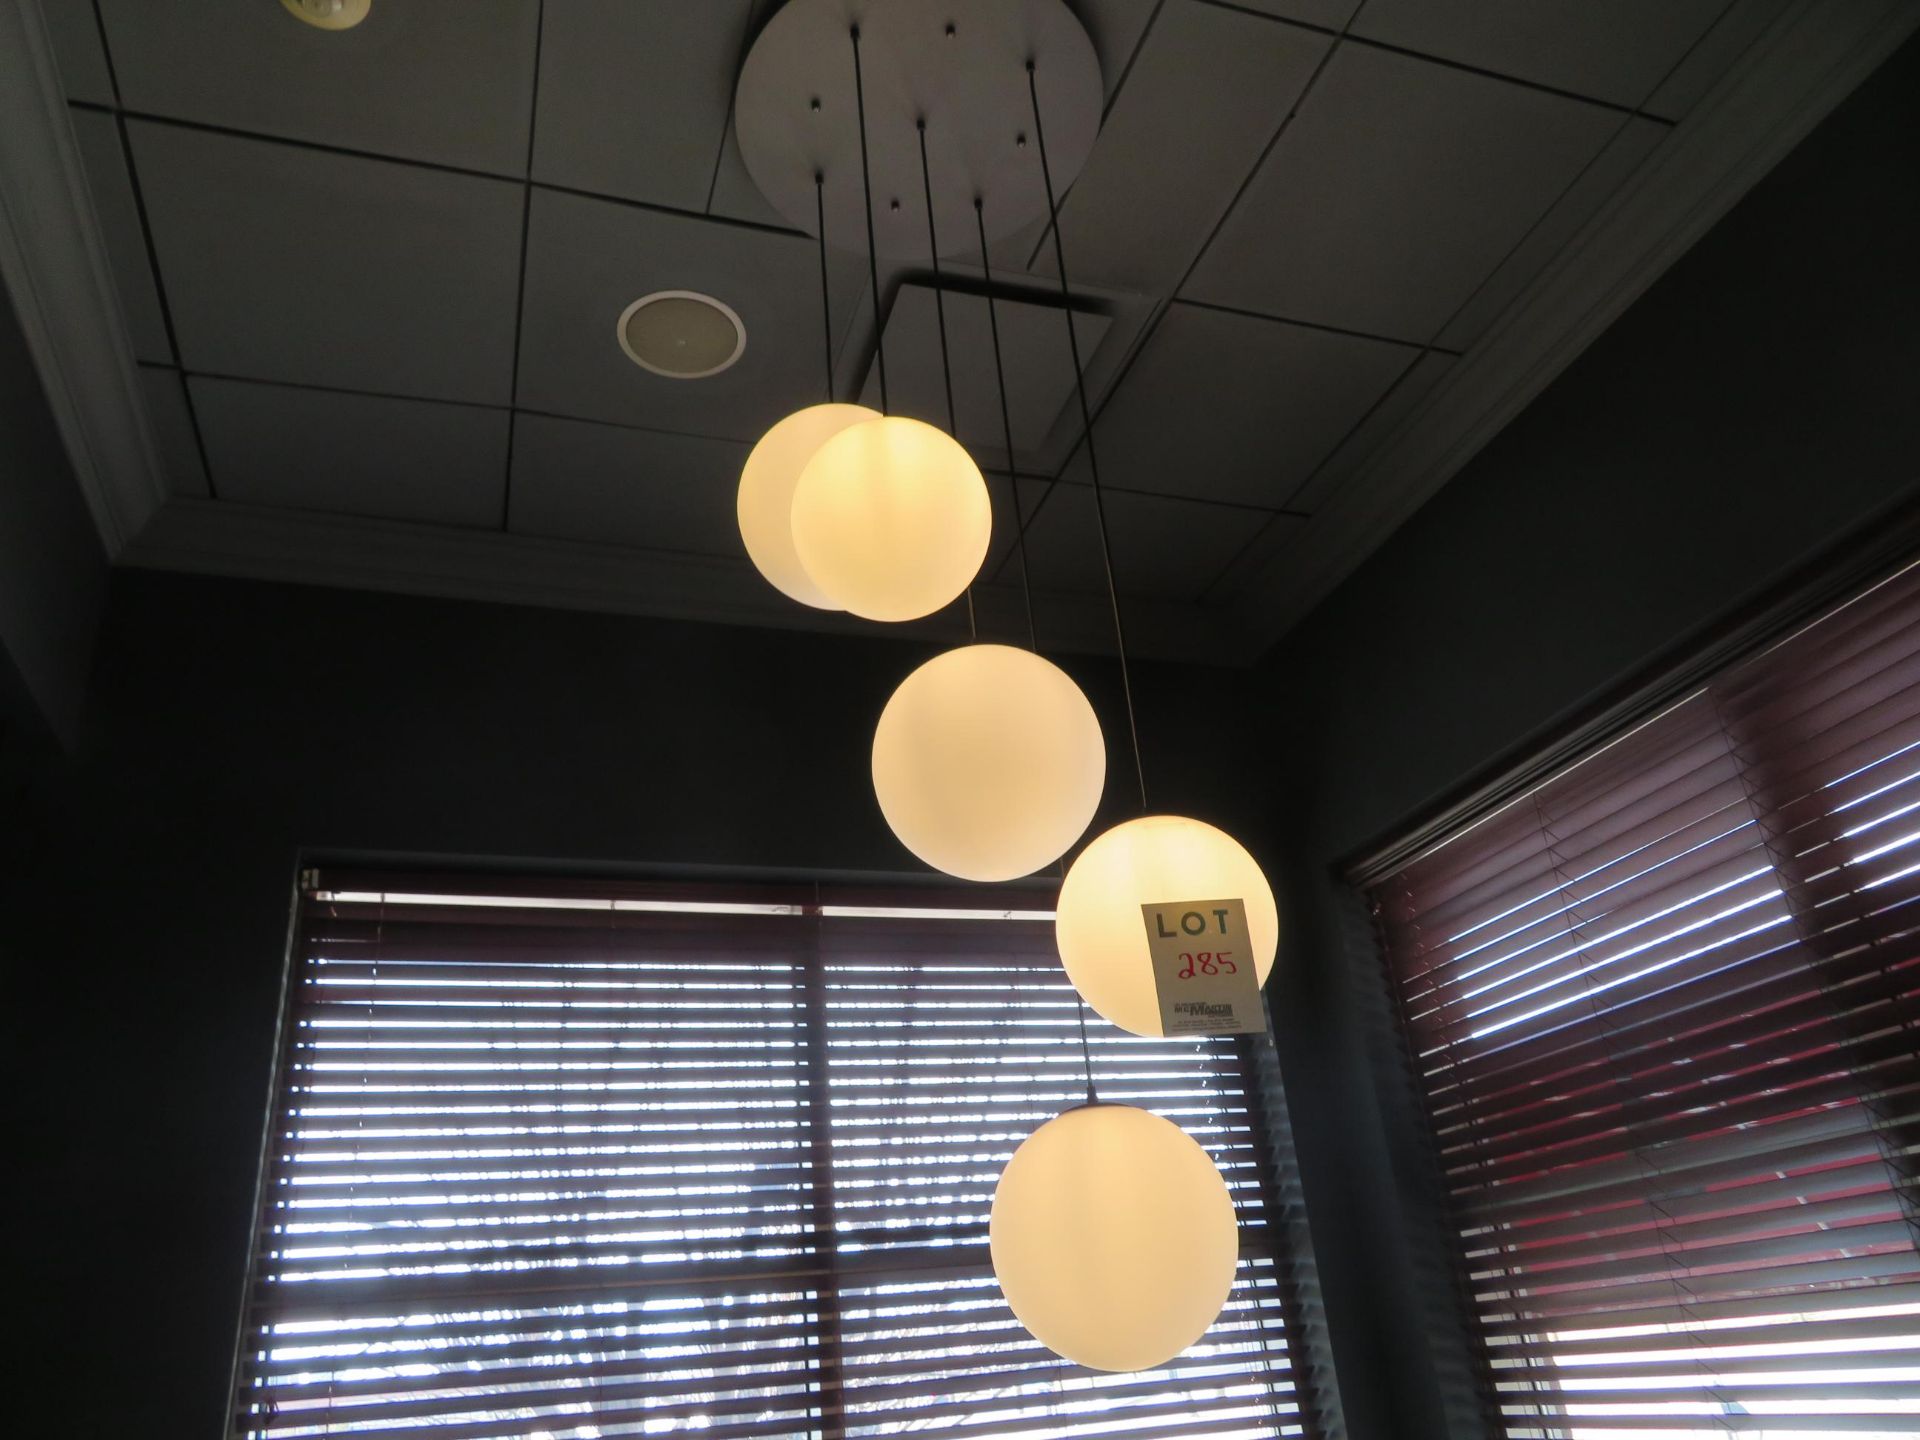 Decorative light fixture - Image 2 of 2